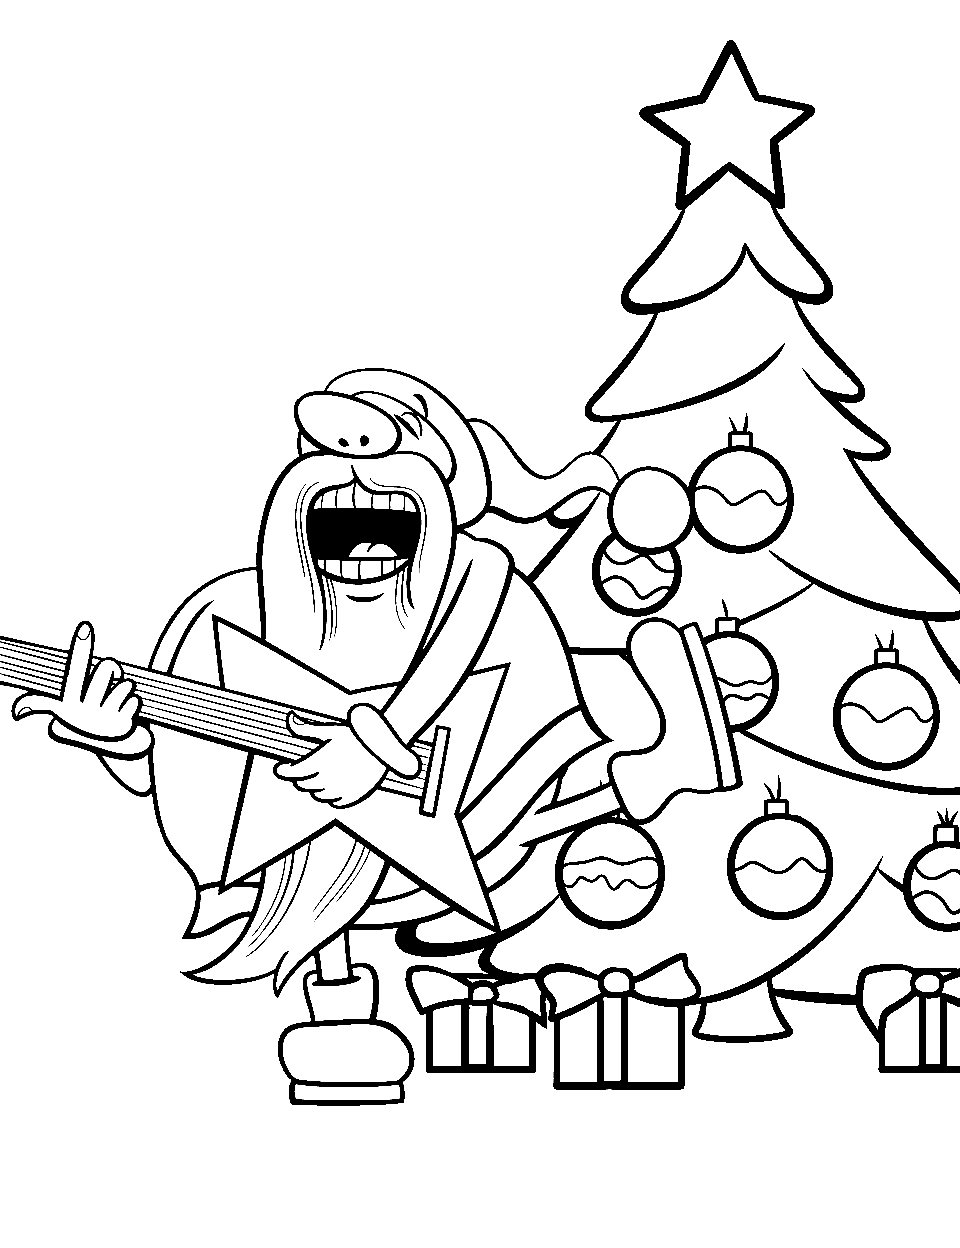 Guitarist Santa Coloring Page - Santa Claus playing a guitar, ready to rock the night.